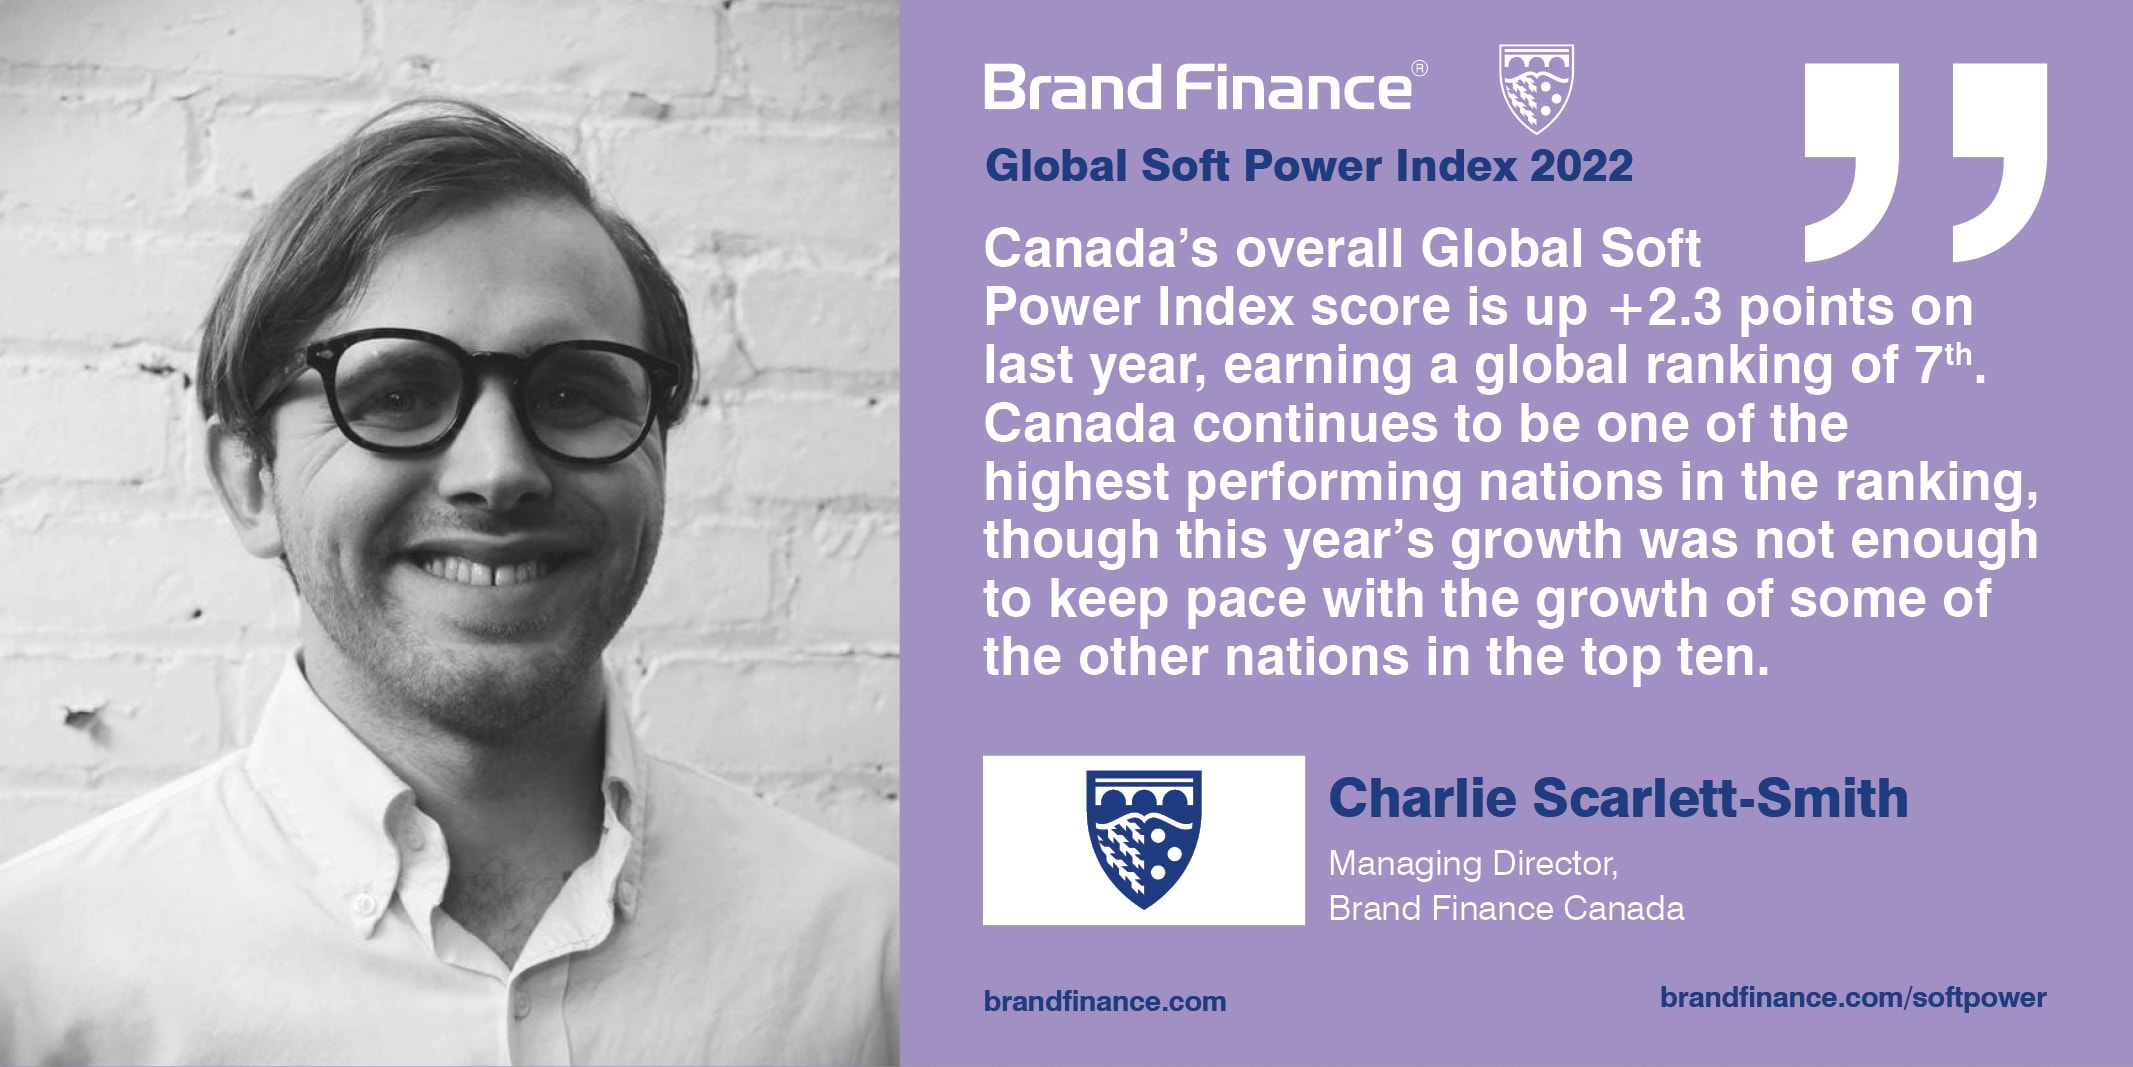 Charles Scarlett-Smith, Managing Director, Brand Finance Canada